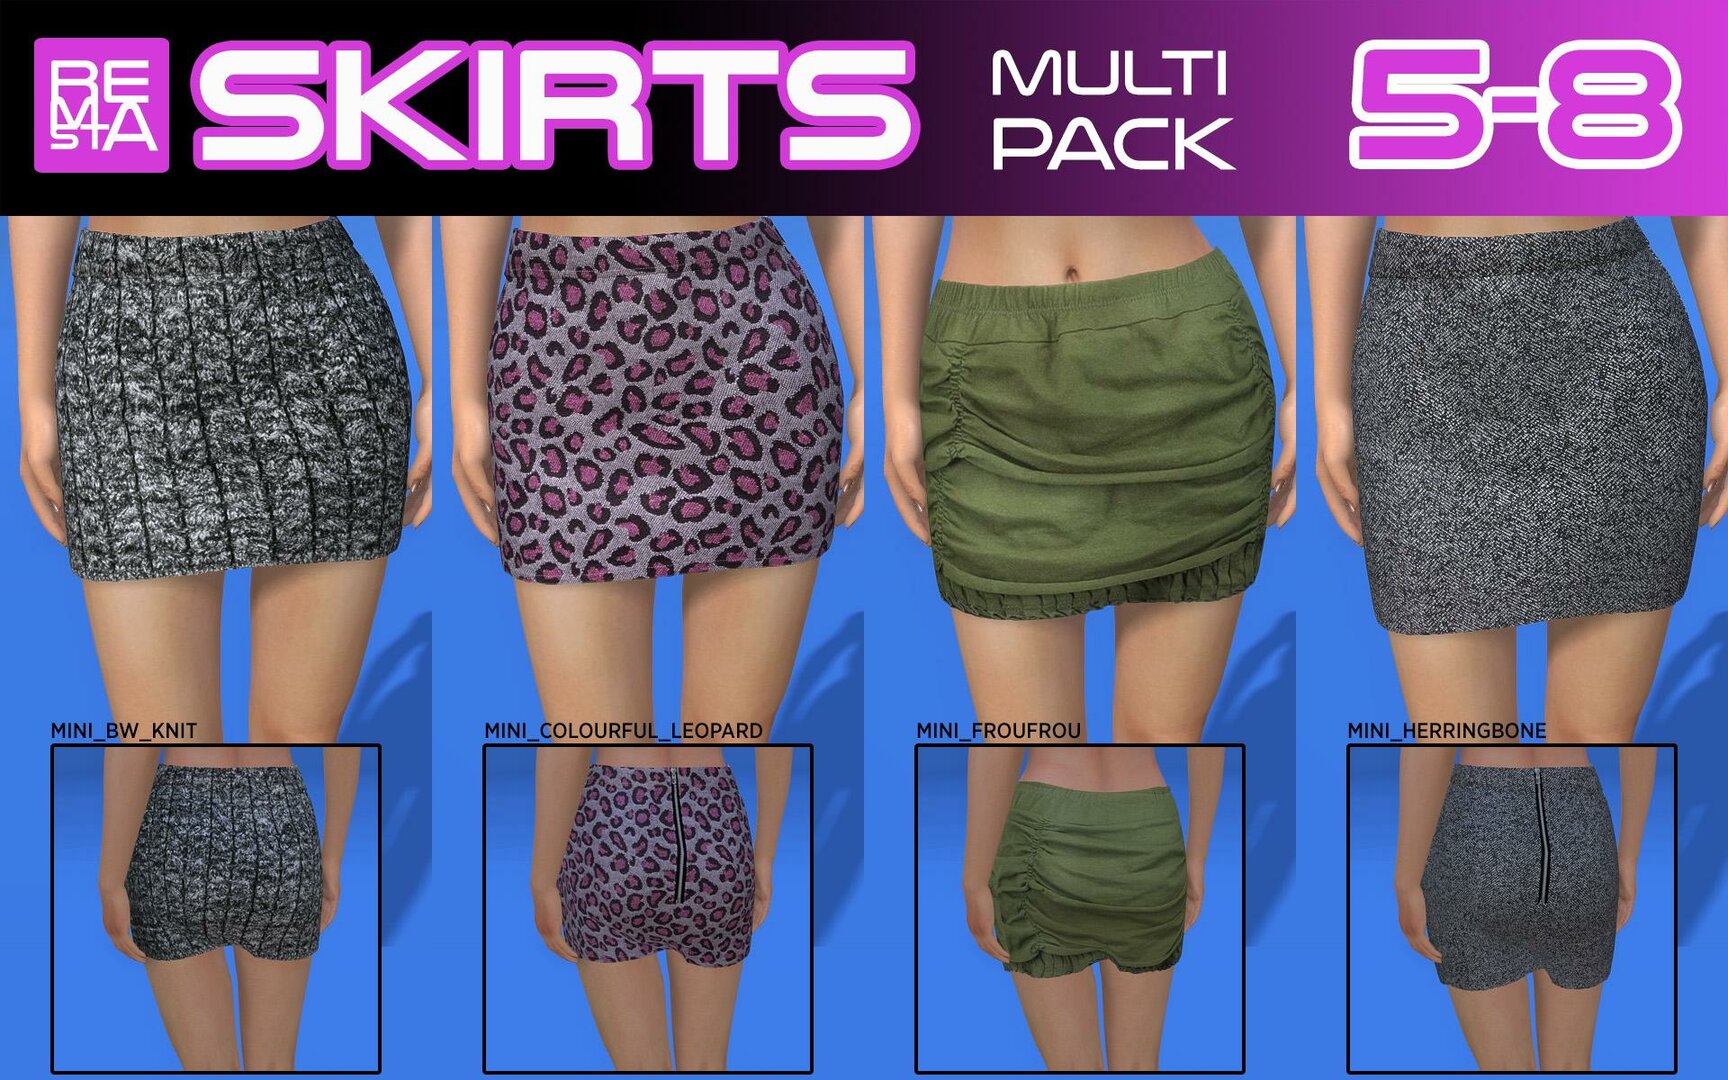 61484752_re_skirts_multi_pack_5-8.jpg